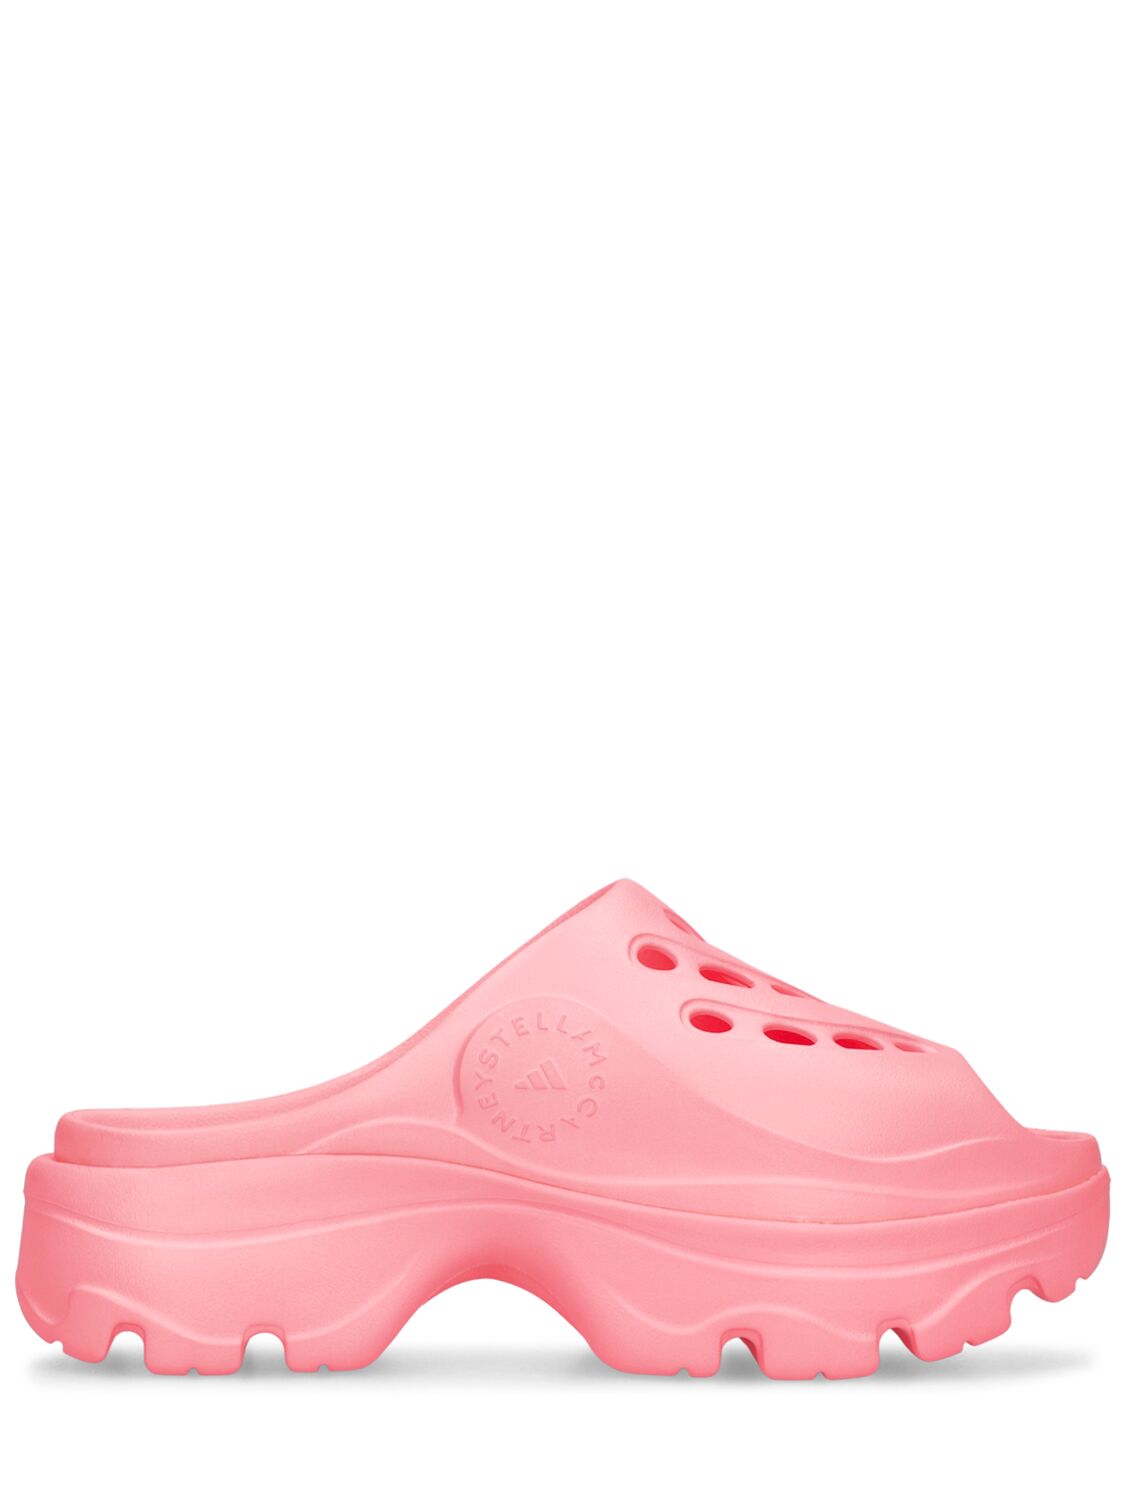 Image of Clog Sandals